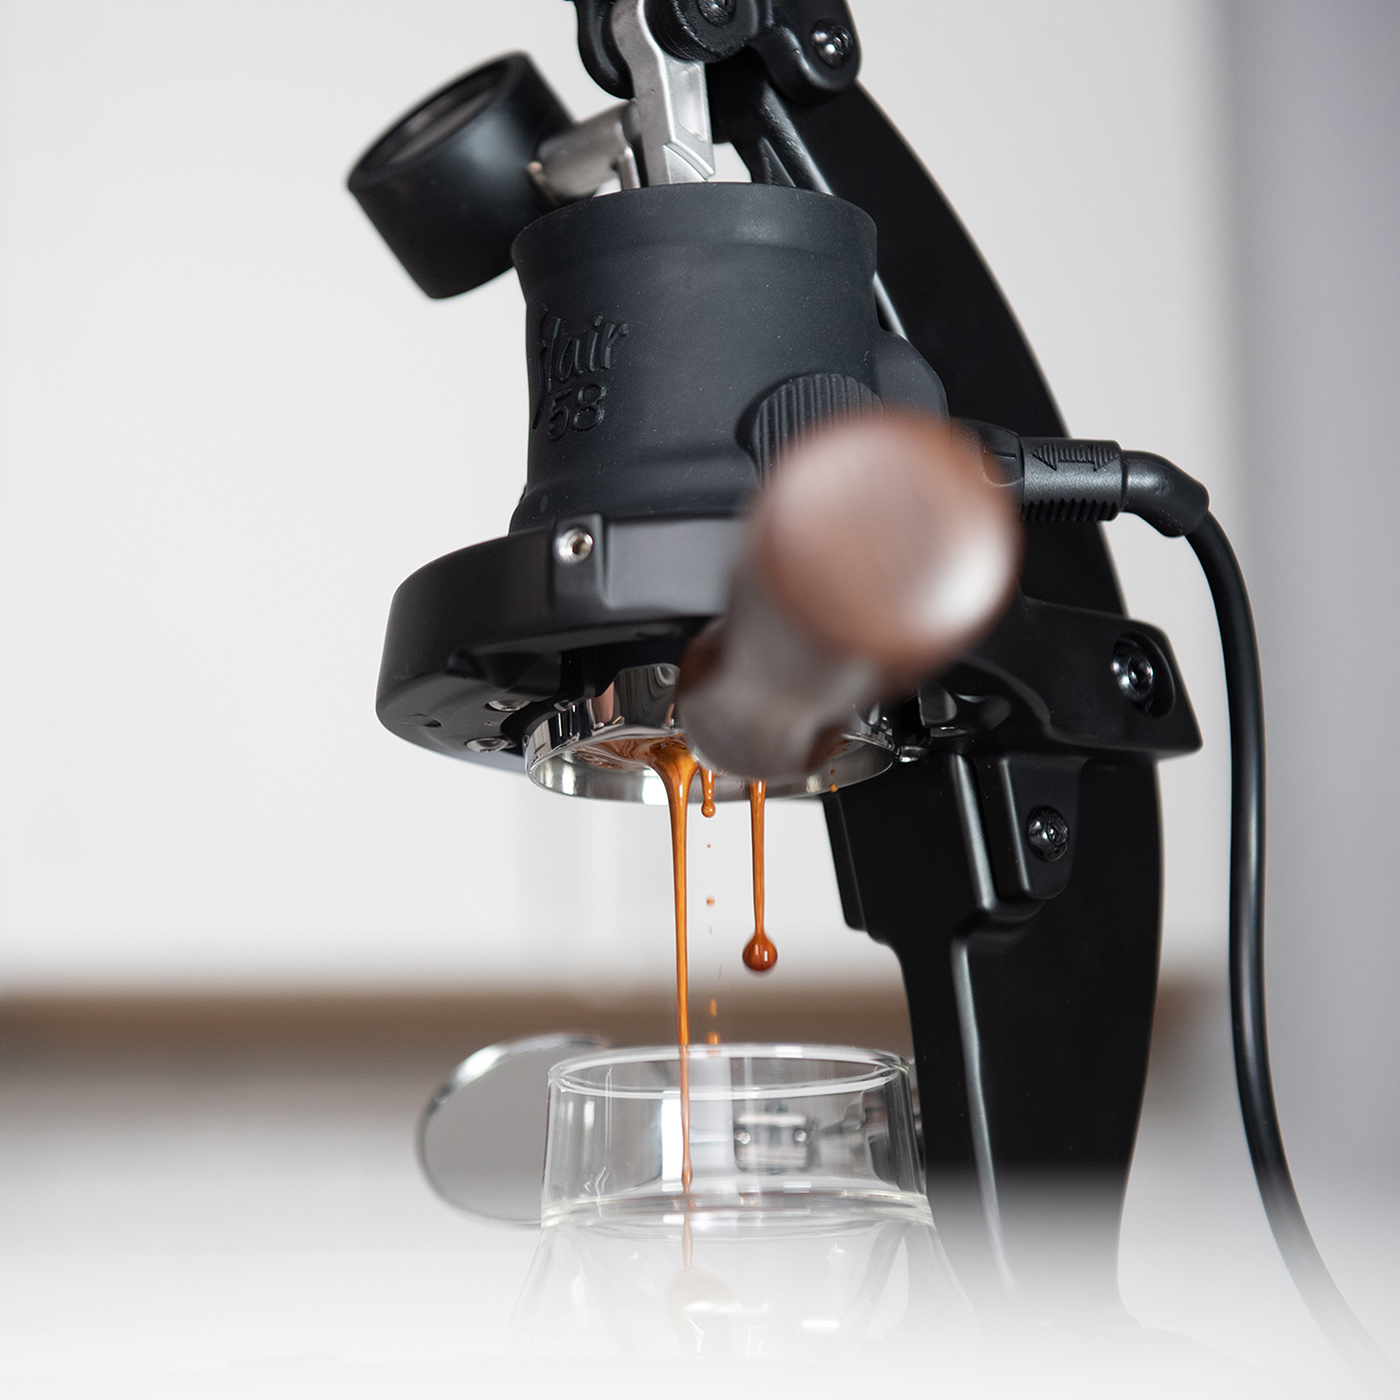 Flair Pro 2 Manual Espresso Maker - Black